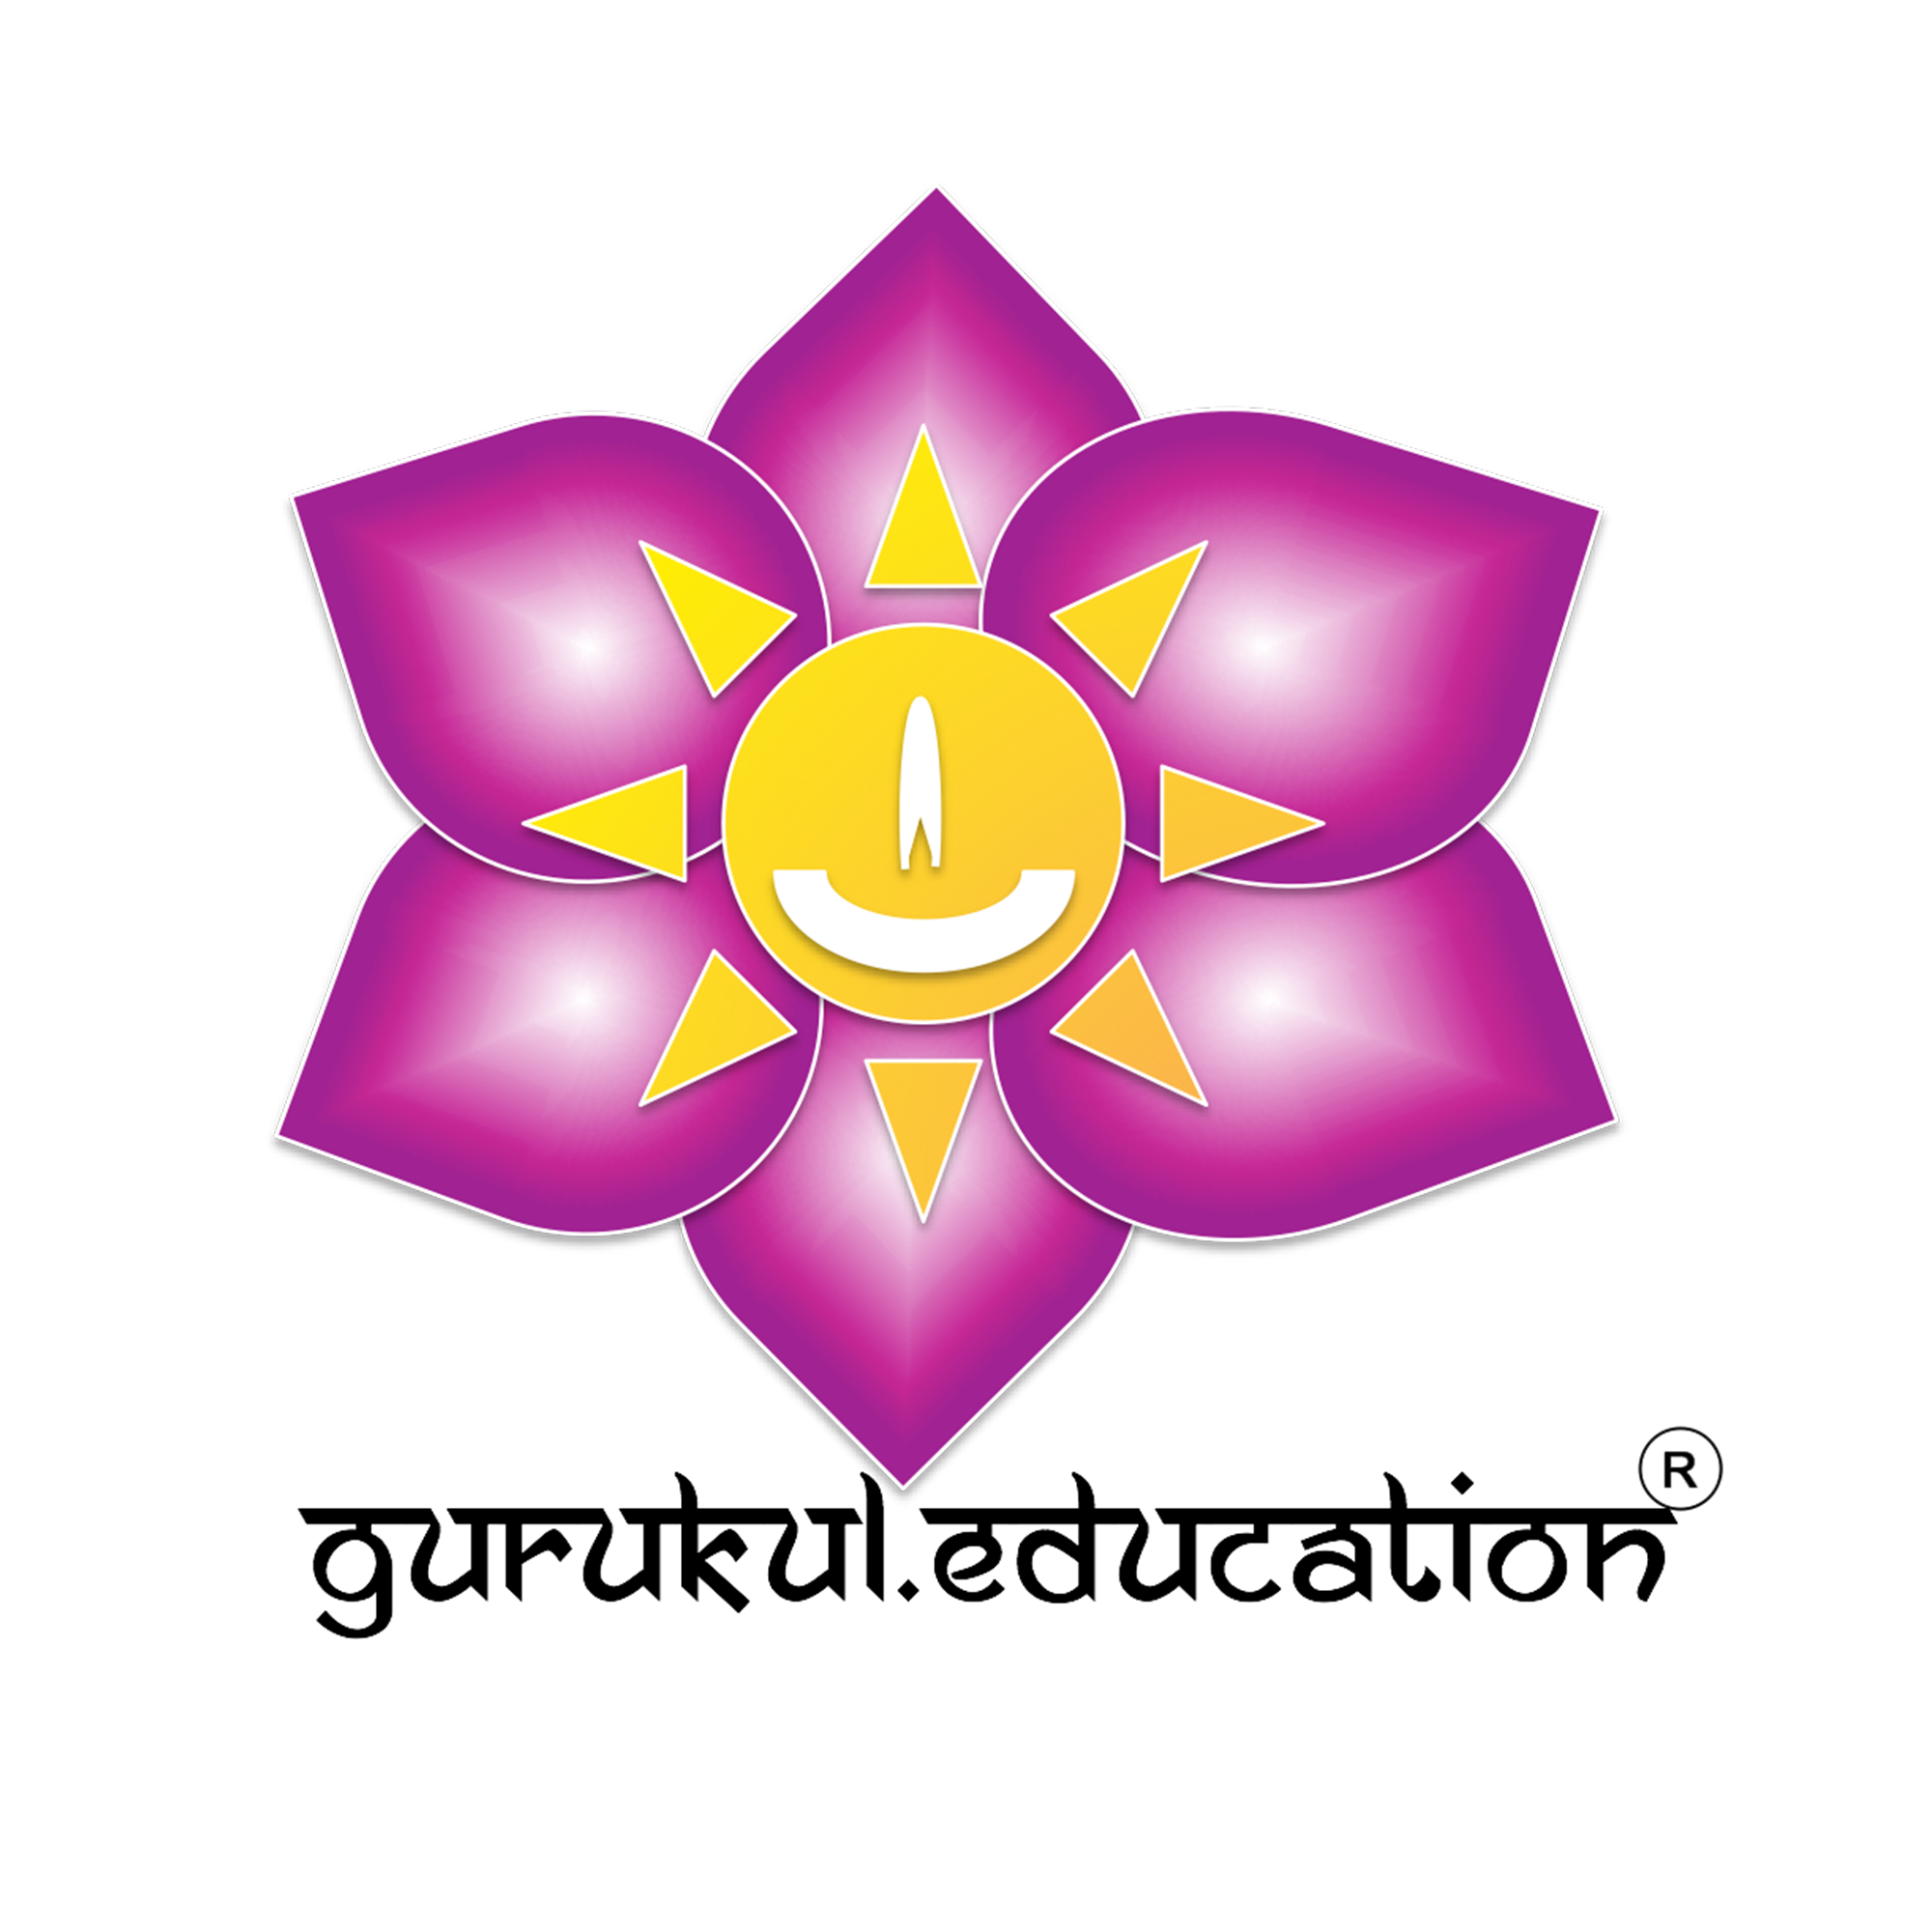 Gurukul Education Logo